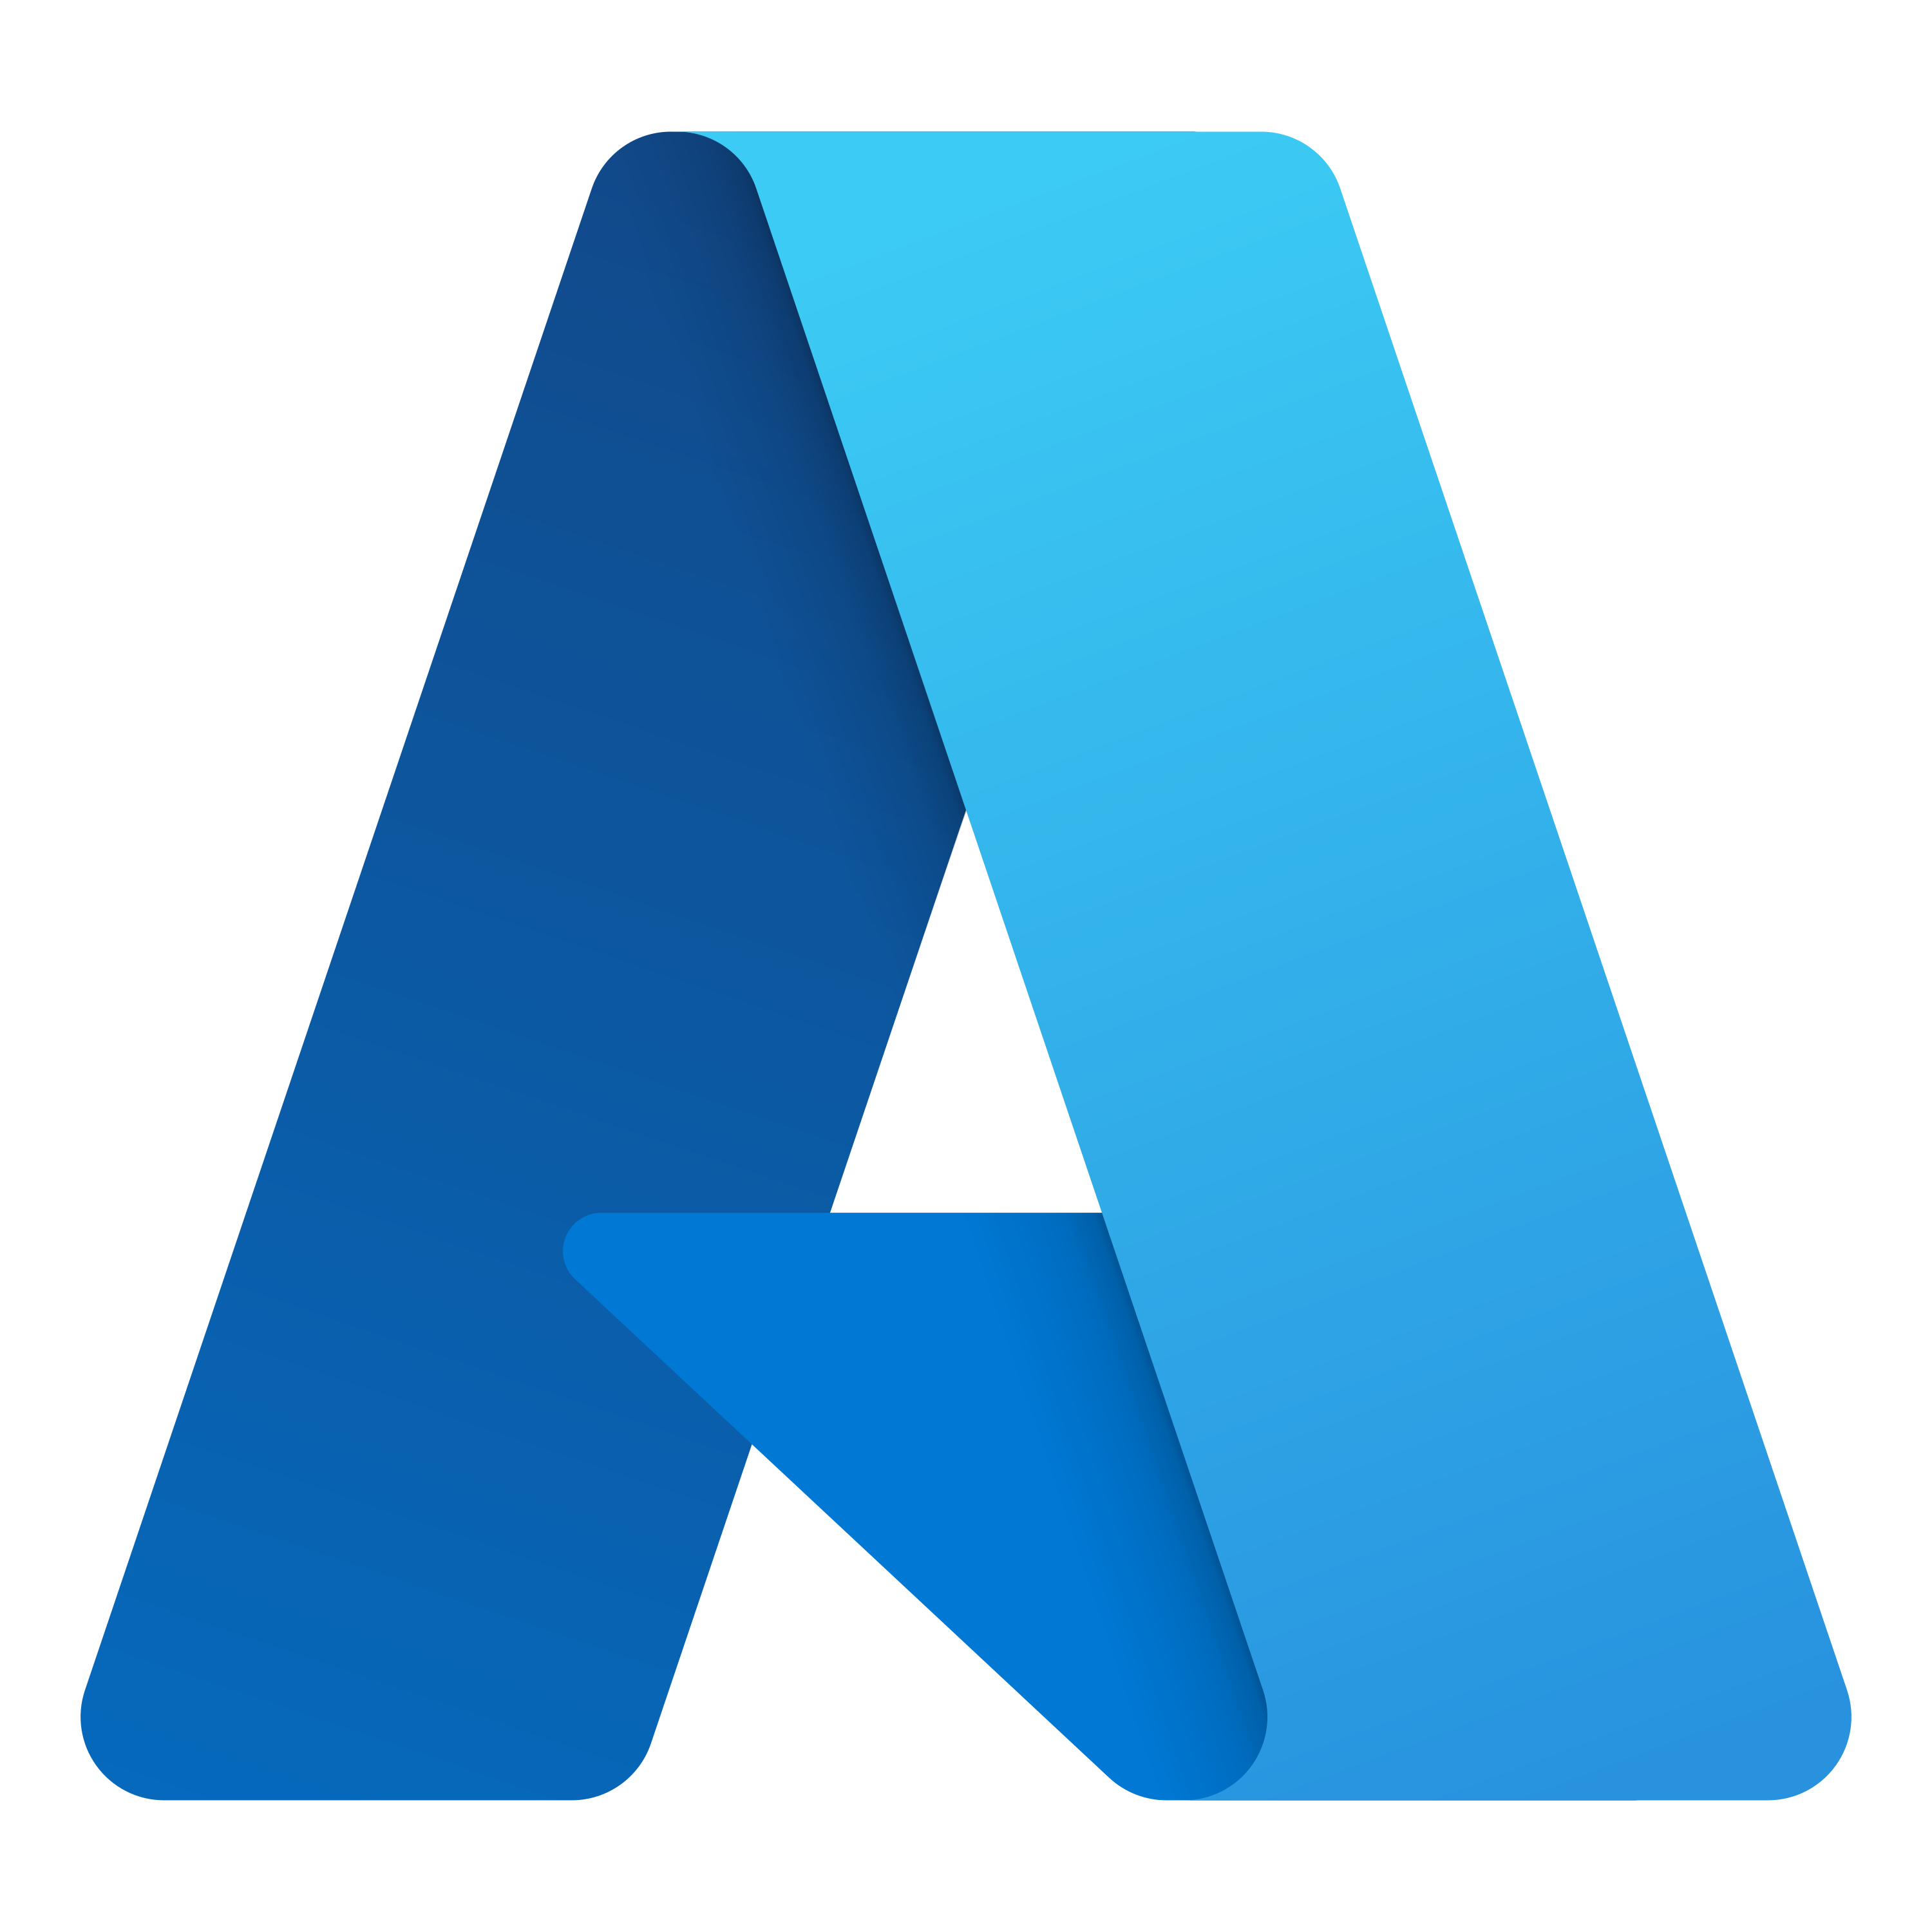 Logo di Azure